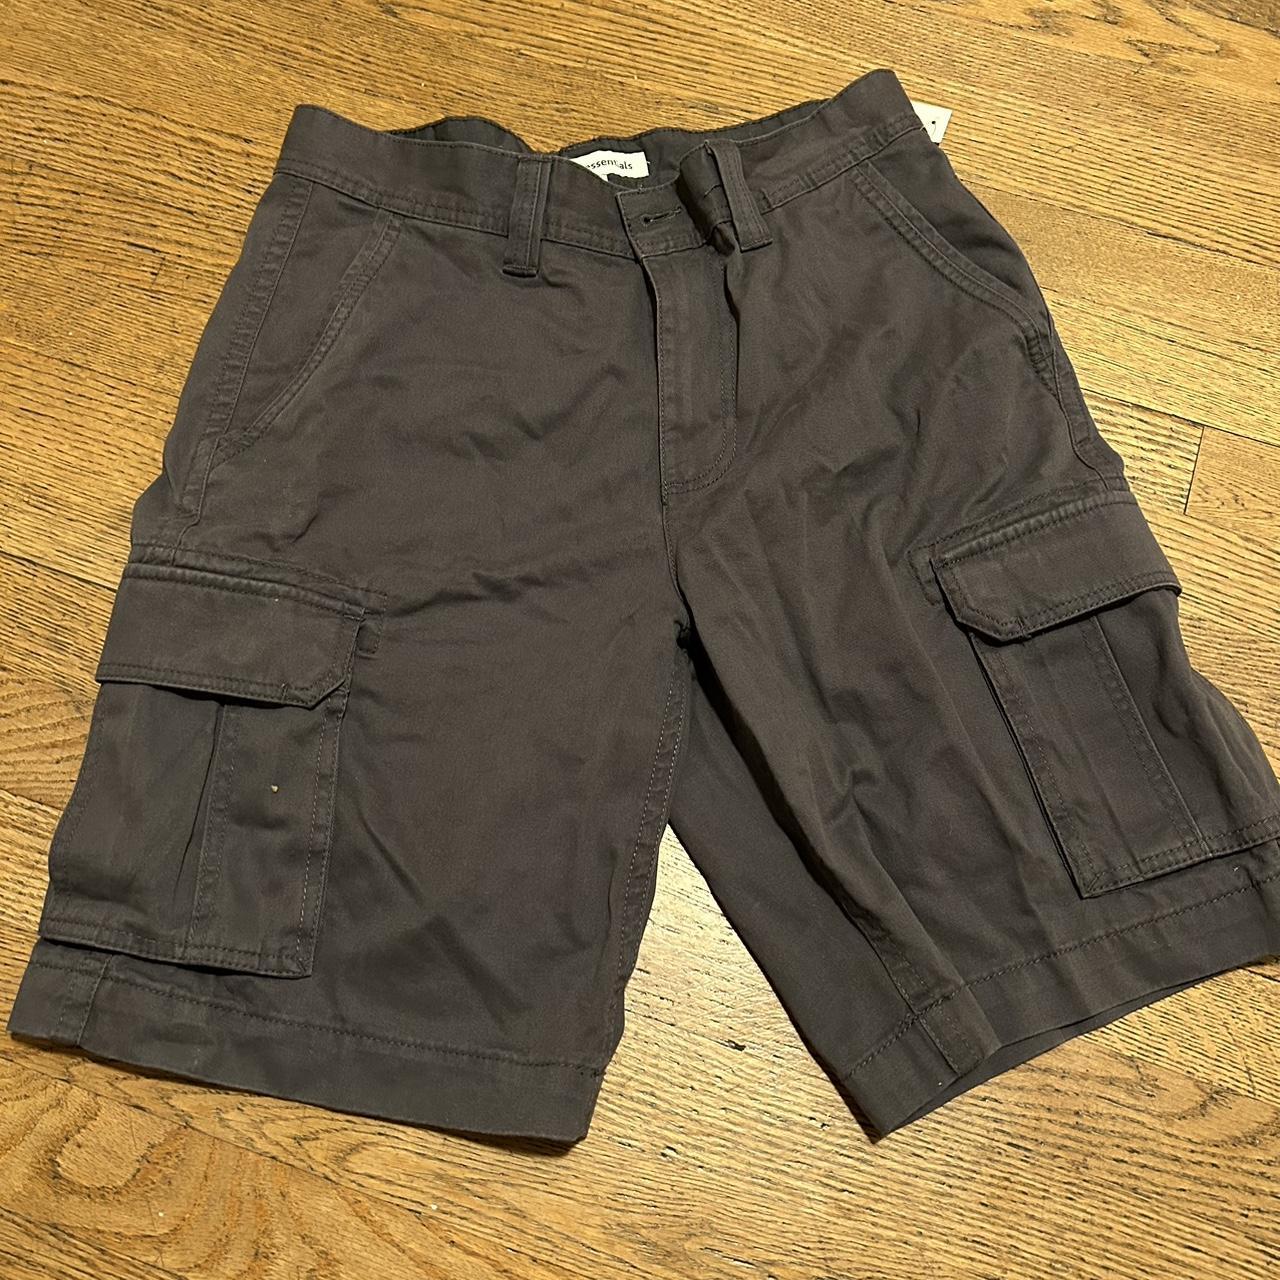 Dark grey cargo shorts #jorts #cargoshorts #workwear - Depop